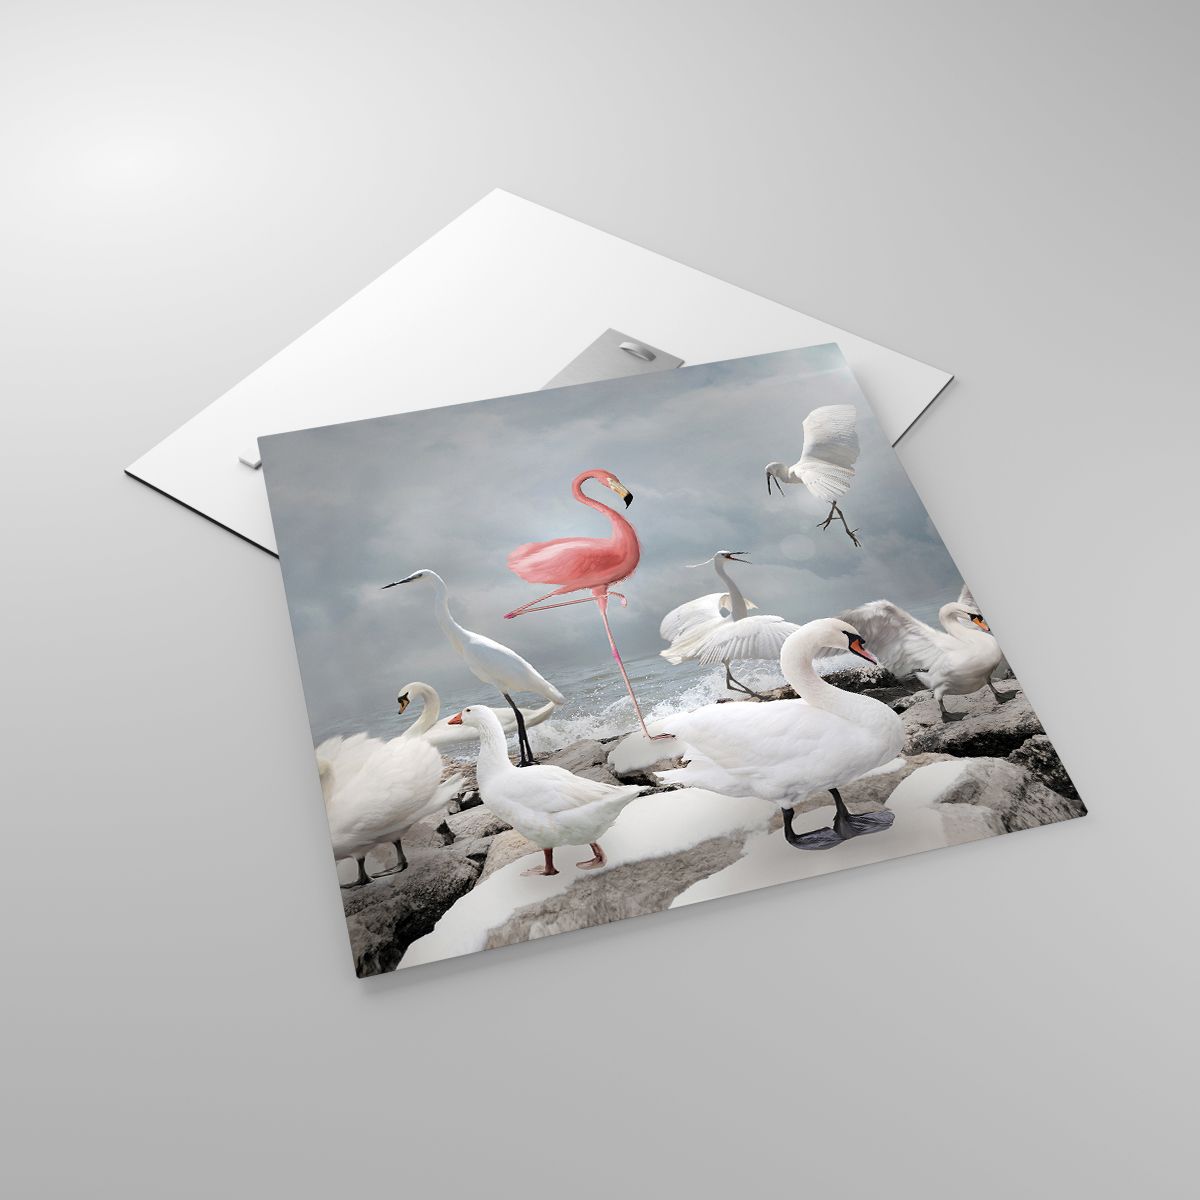 Glasbild Flamingo, Glasbild Schwan, Glasbild Die Vögel, Glasbild Tiere, Glasbild Natur